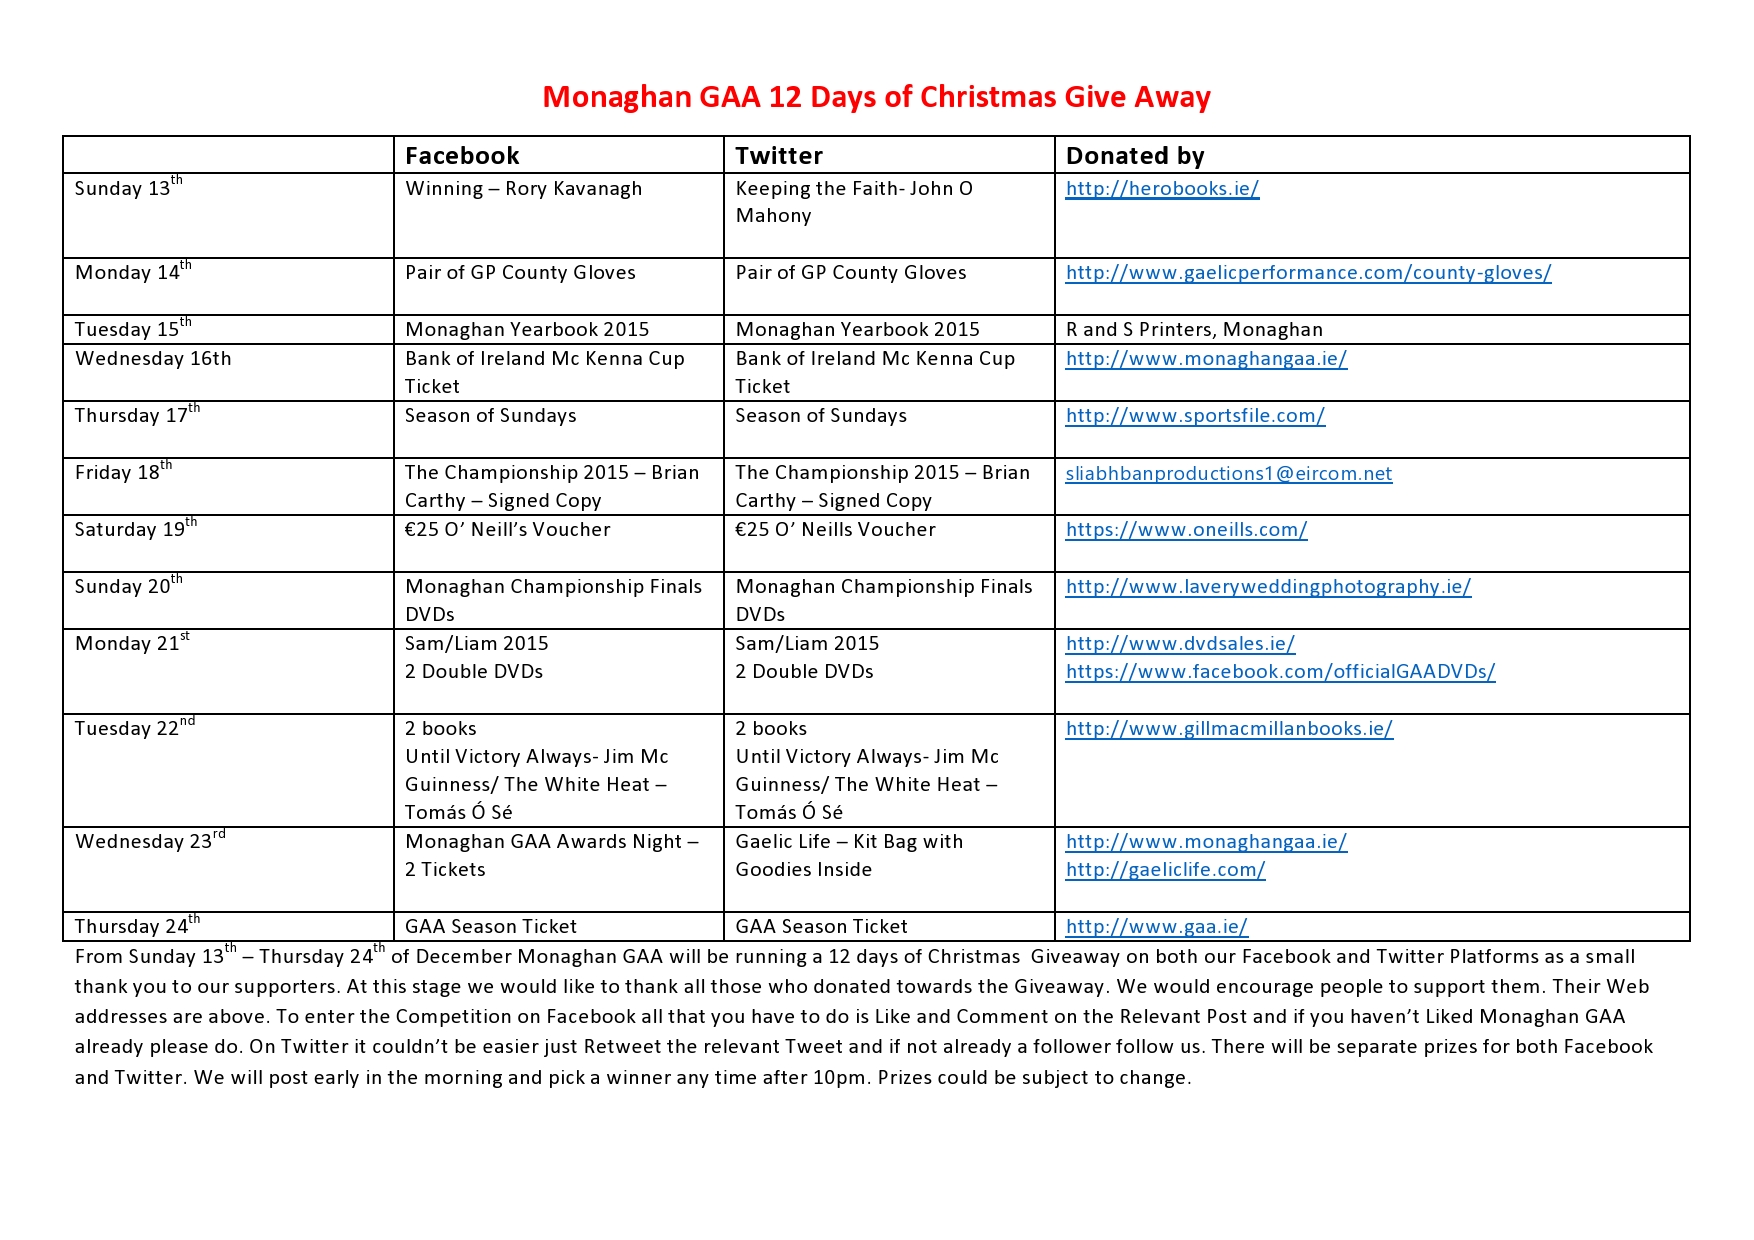 Monaghan GAA 12 days of Christmas Giveaway